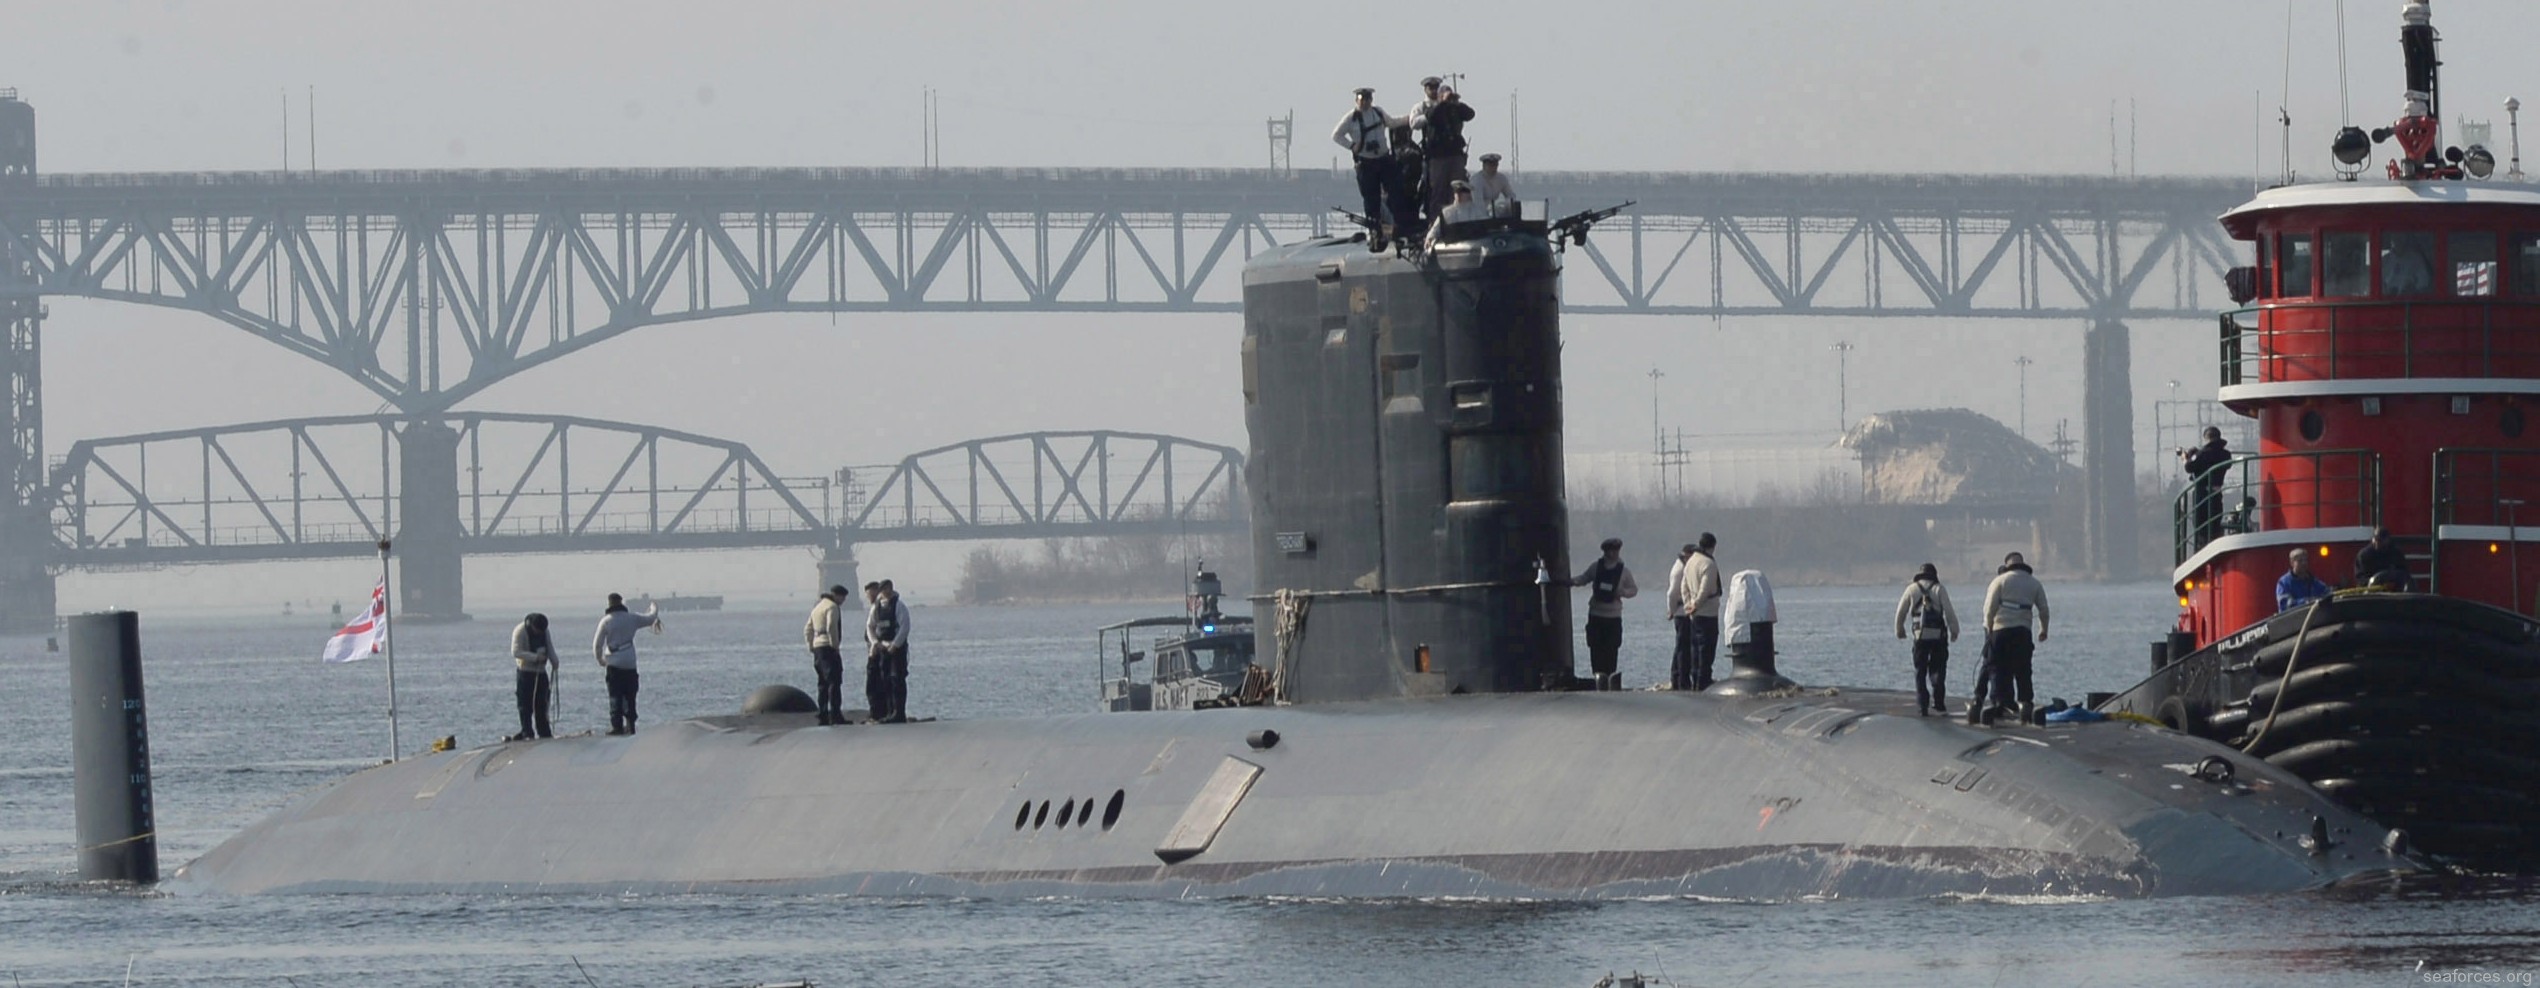 s91 hms trenchant trafalgar class attack submarine hunter killer royal navy 09